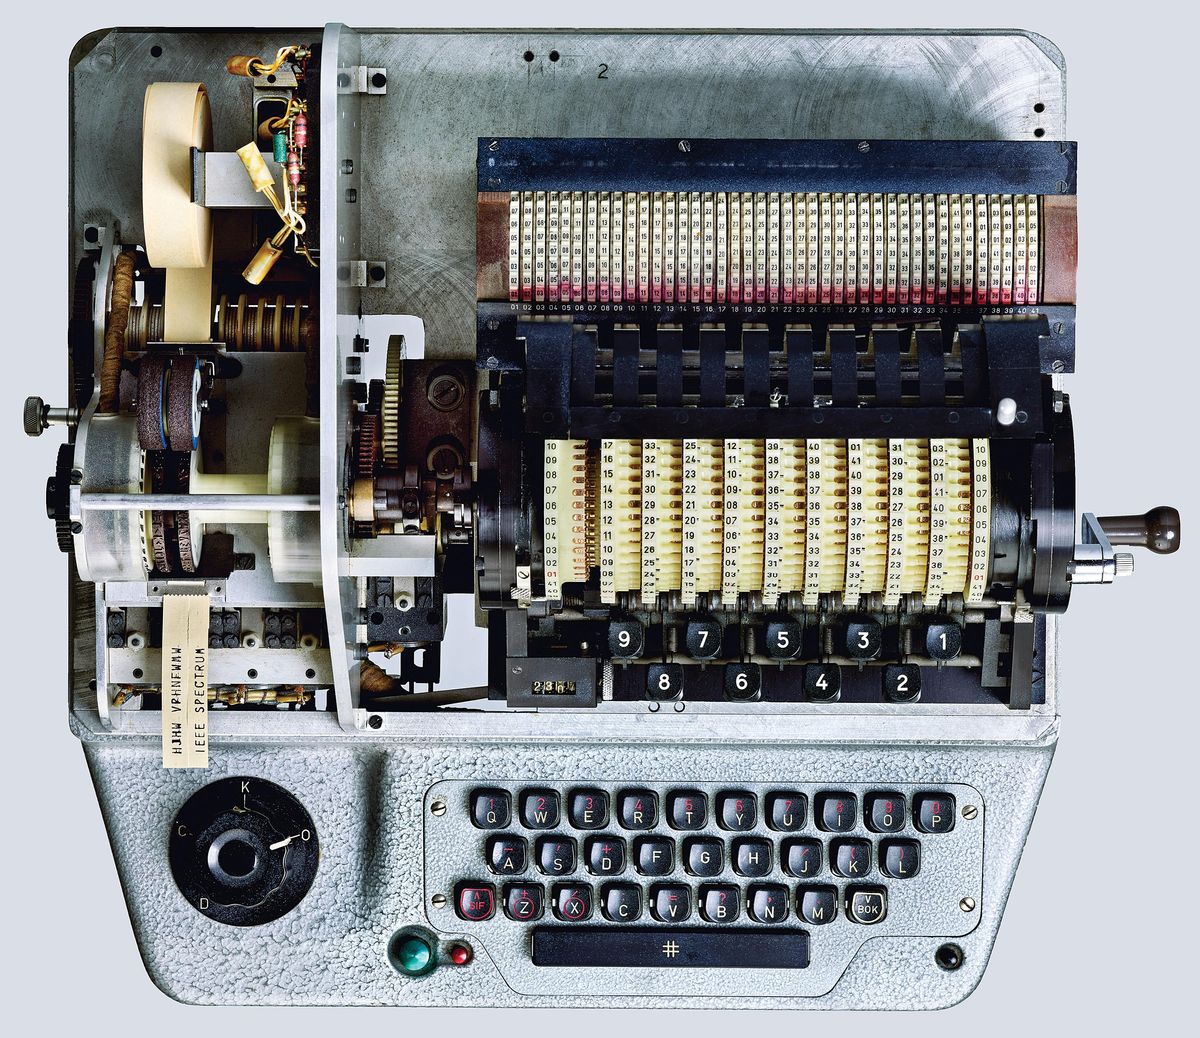 The HX-63 cipher machine